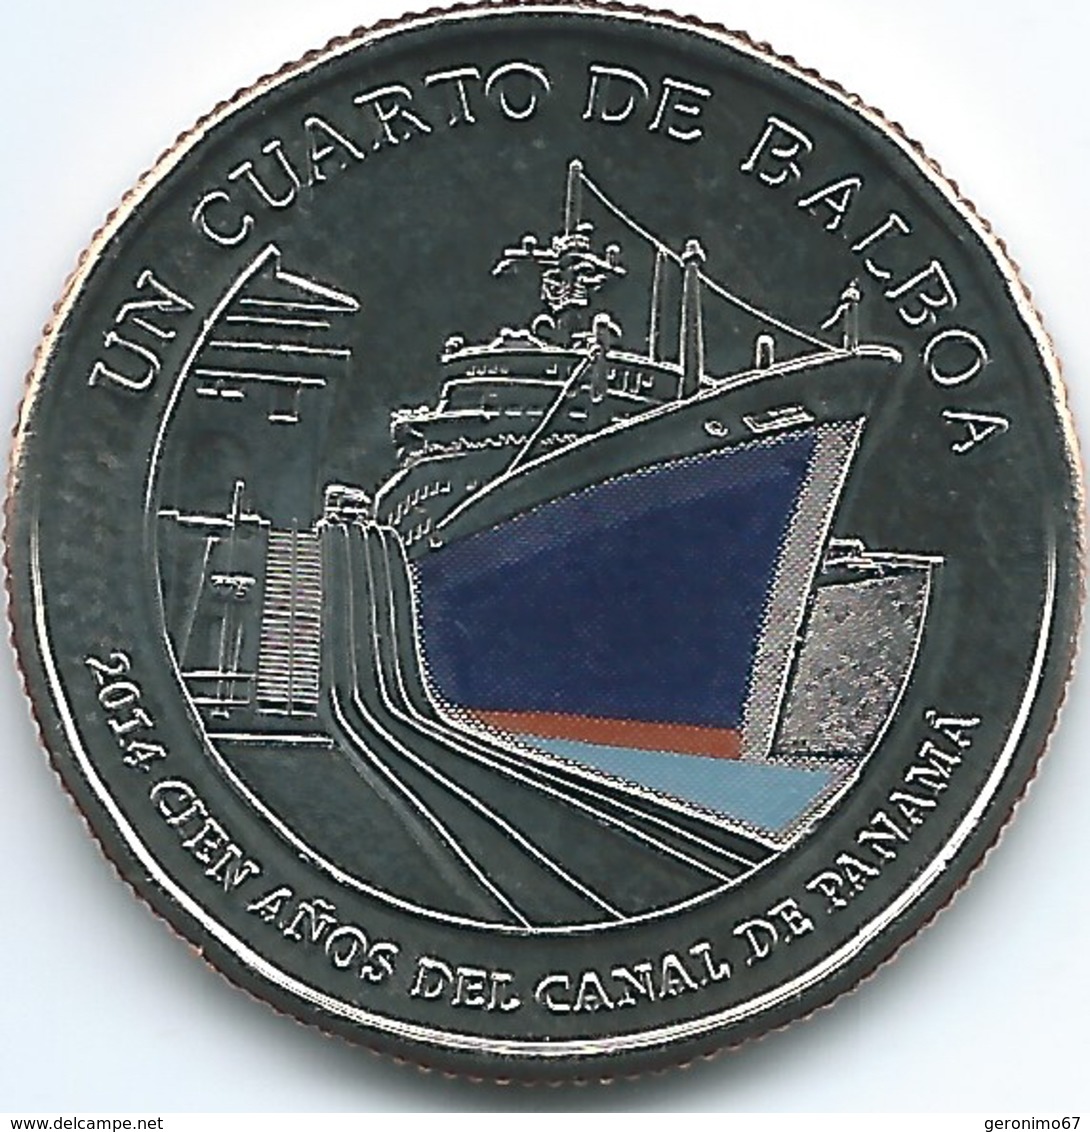 Panama - 2016 - ¼ Balboa - Panama Canal Centenary - Panama